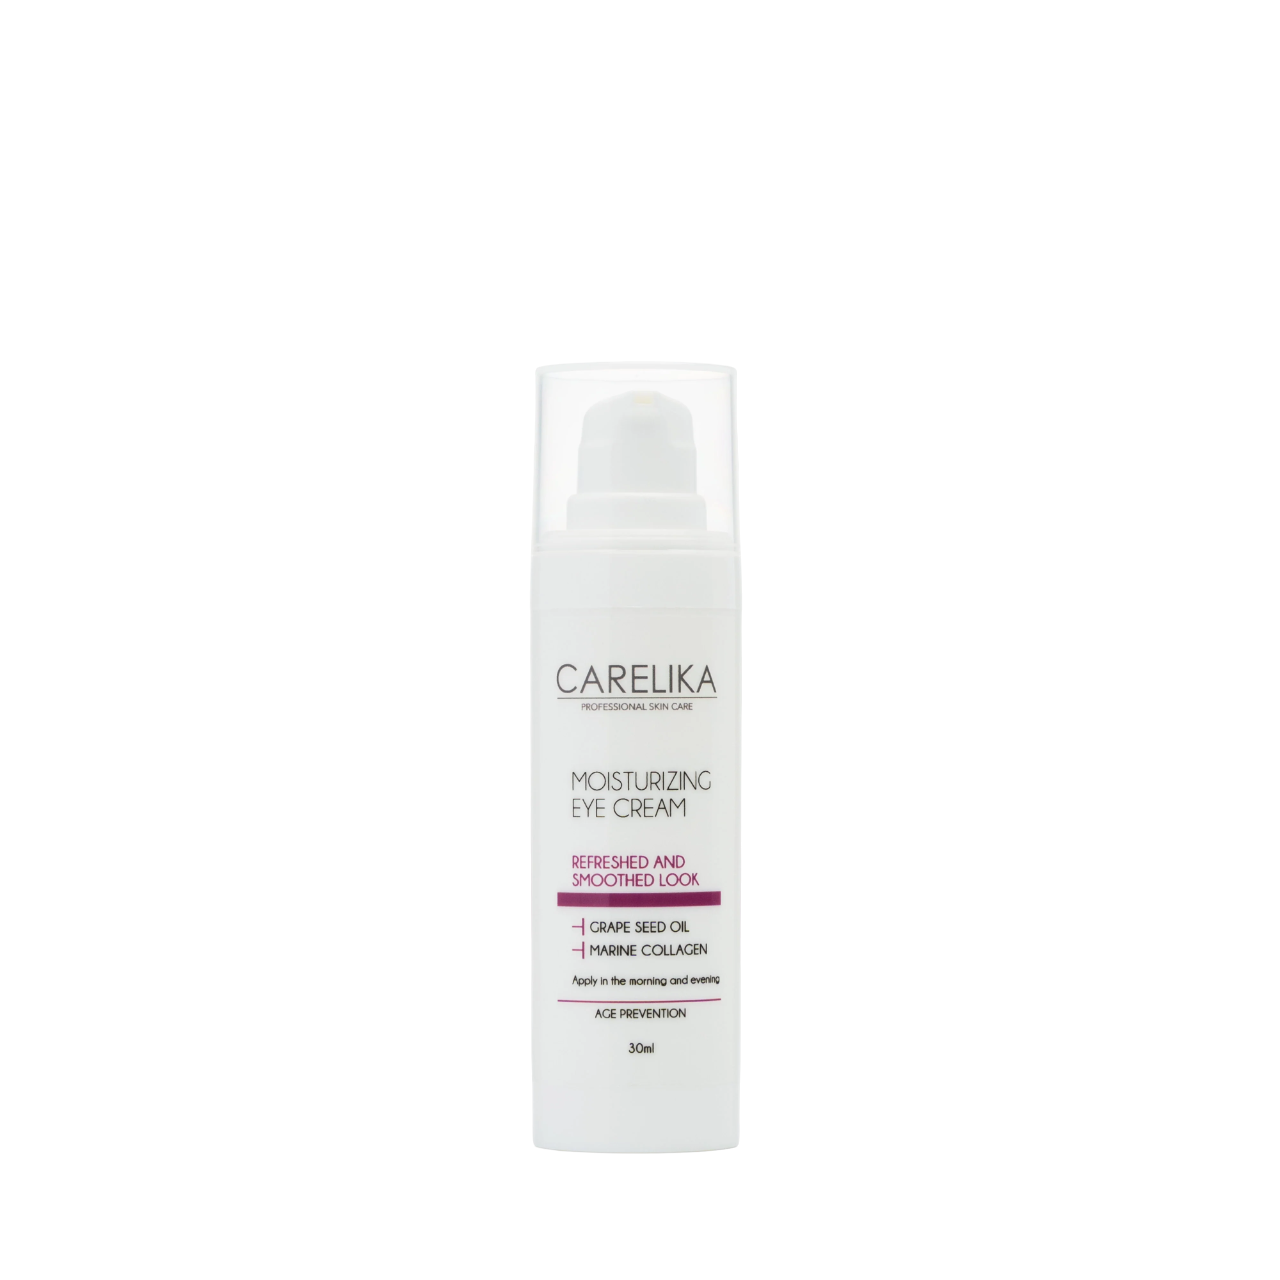 Moisturizing Eye Cream with Collagen by CARELIKA, 30ml